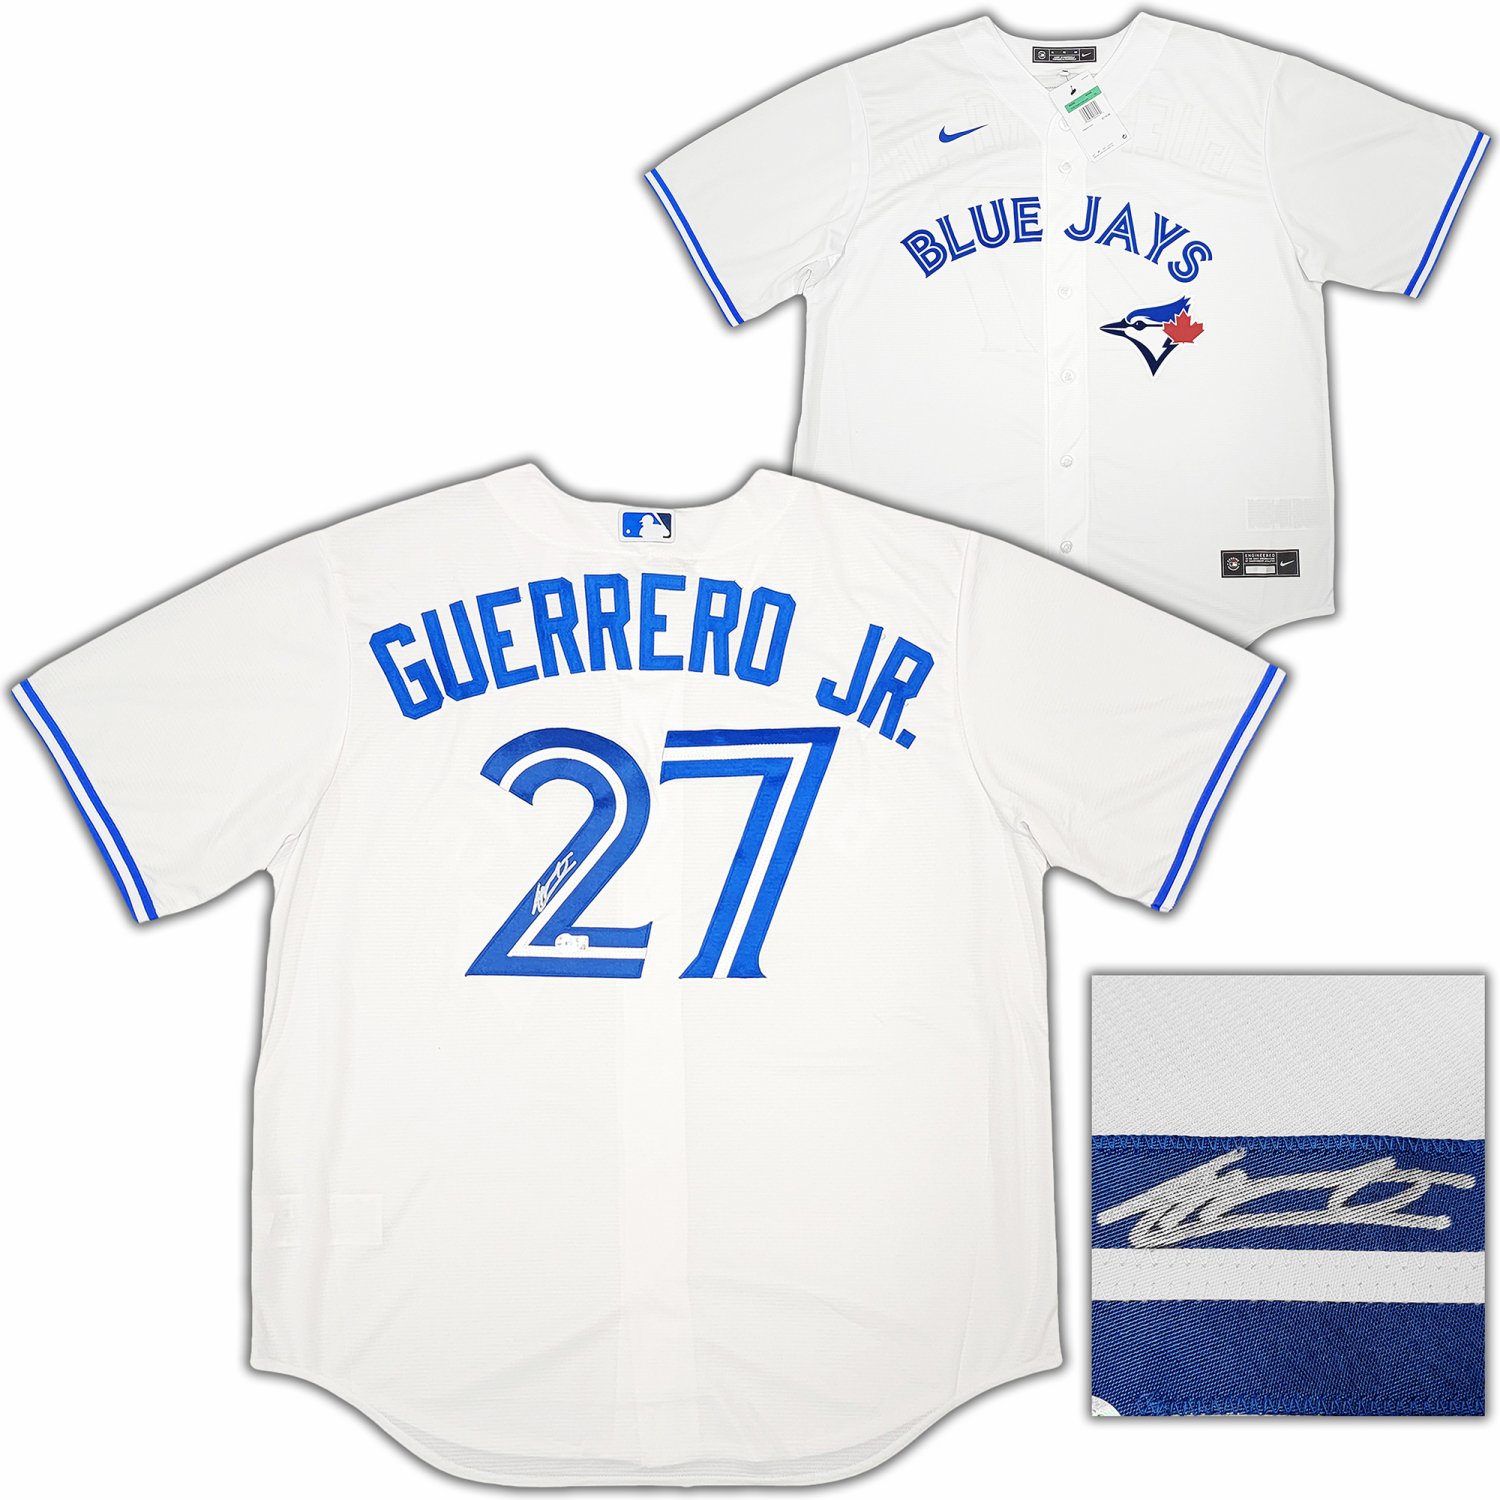 Vladimir Guerrero Jr. Toronto Blue Jays Baseball Memorabilia Signed Jersey  Frame